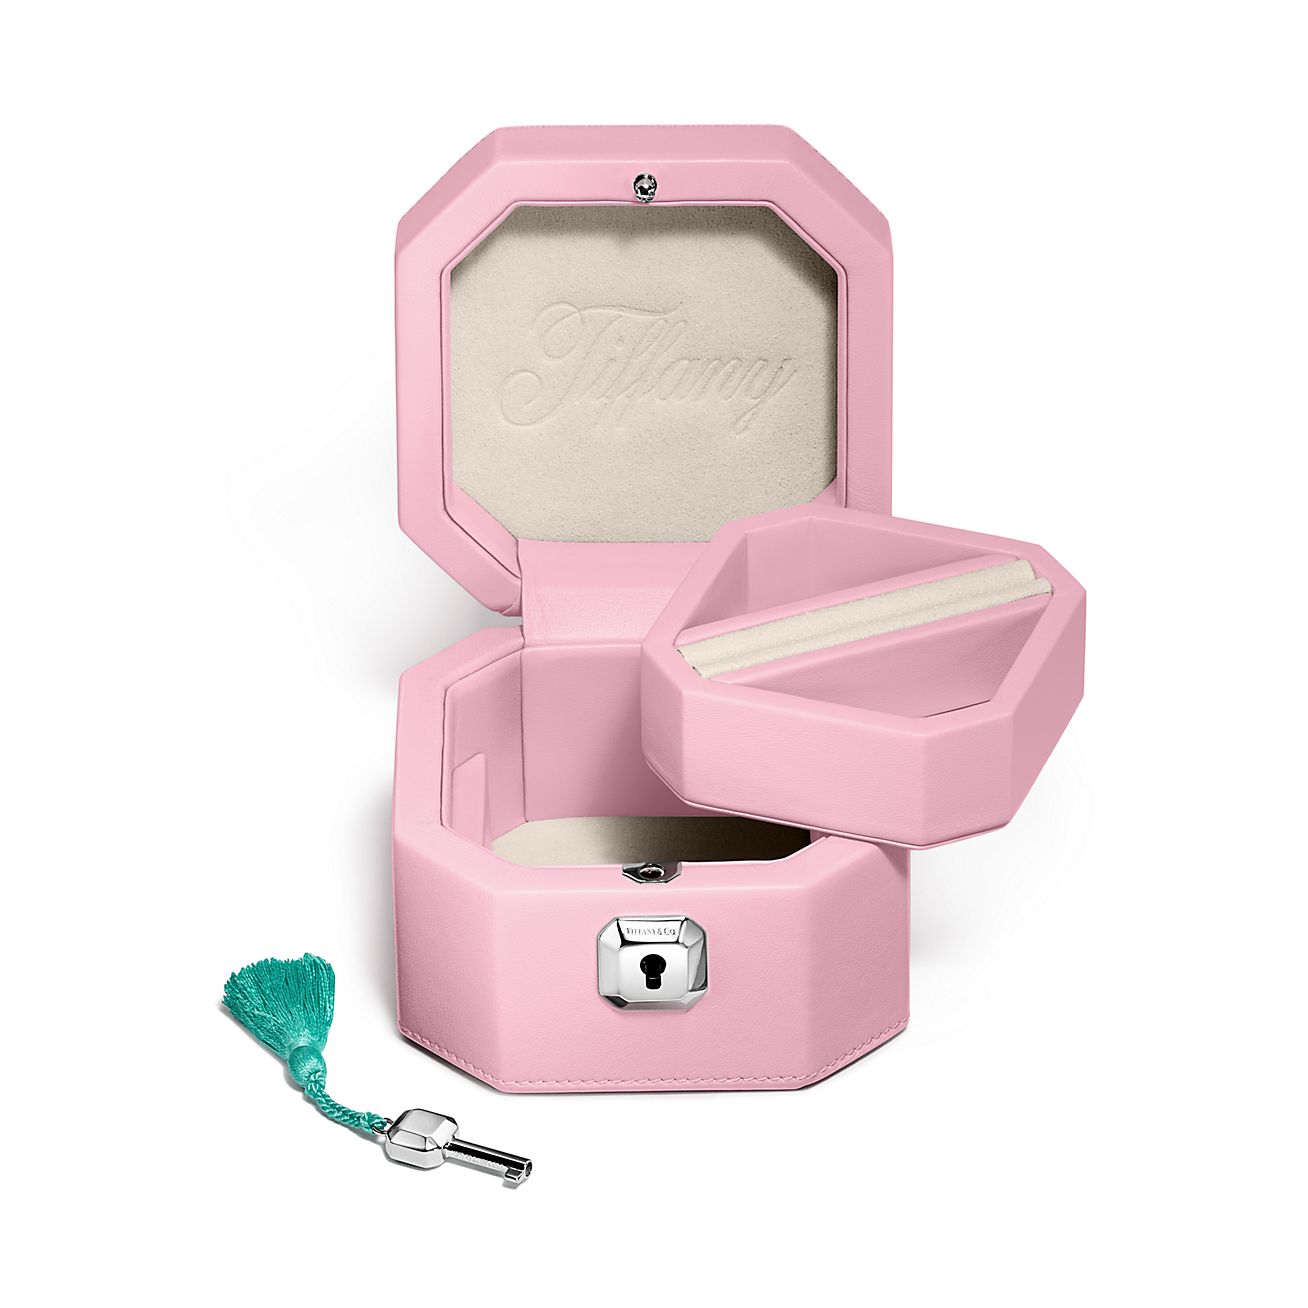 Tiffany Facets Small Jewelry Box